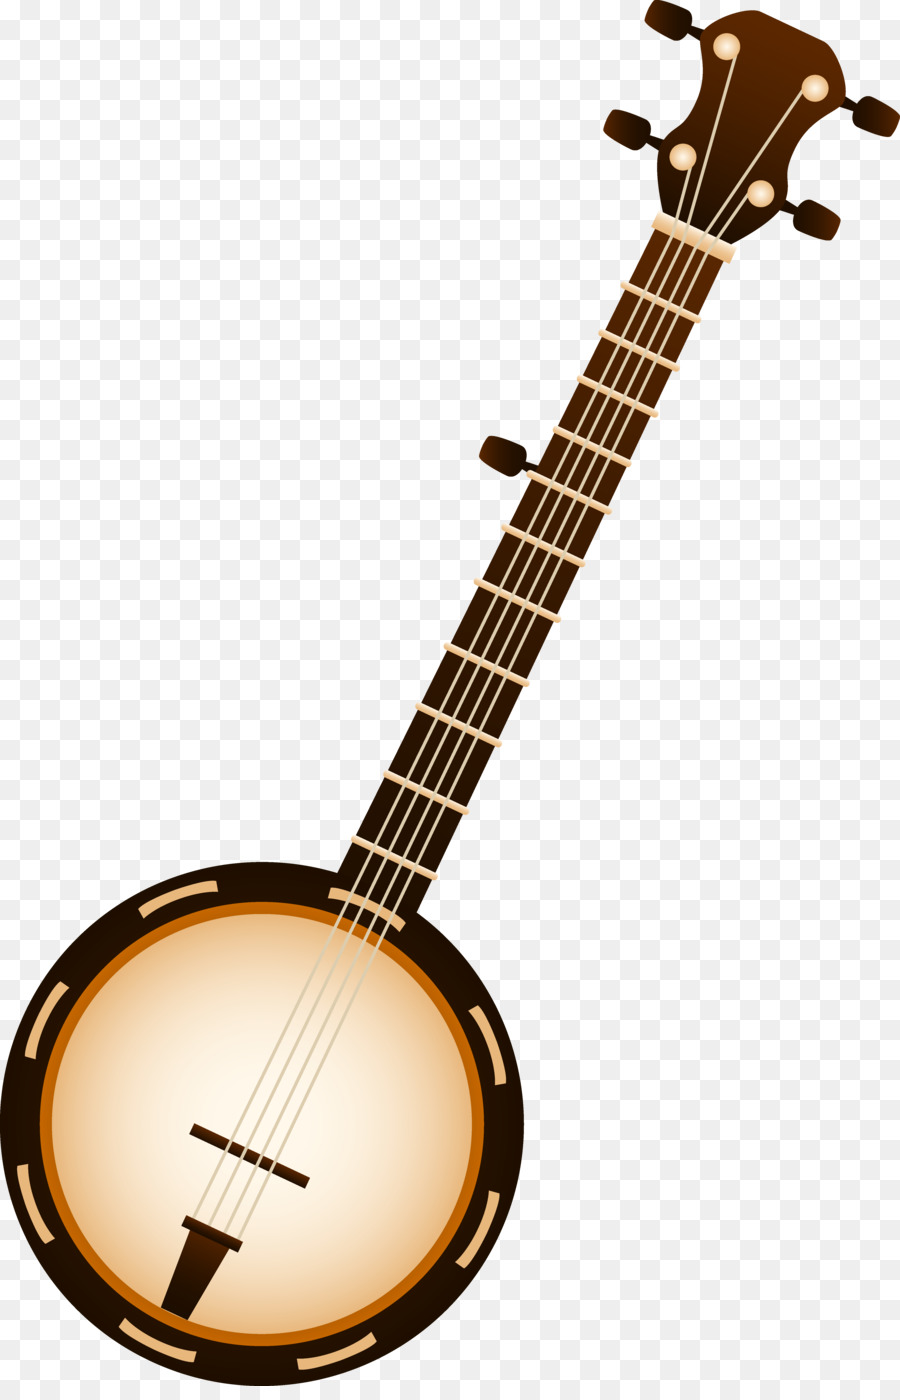 Banjo Drawing Bluegrass Clip art - Roommate Cliparts png download - 4802*7395 - Free Transparent Banjo png Download.